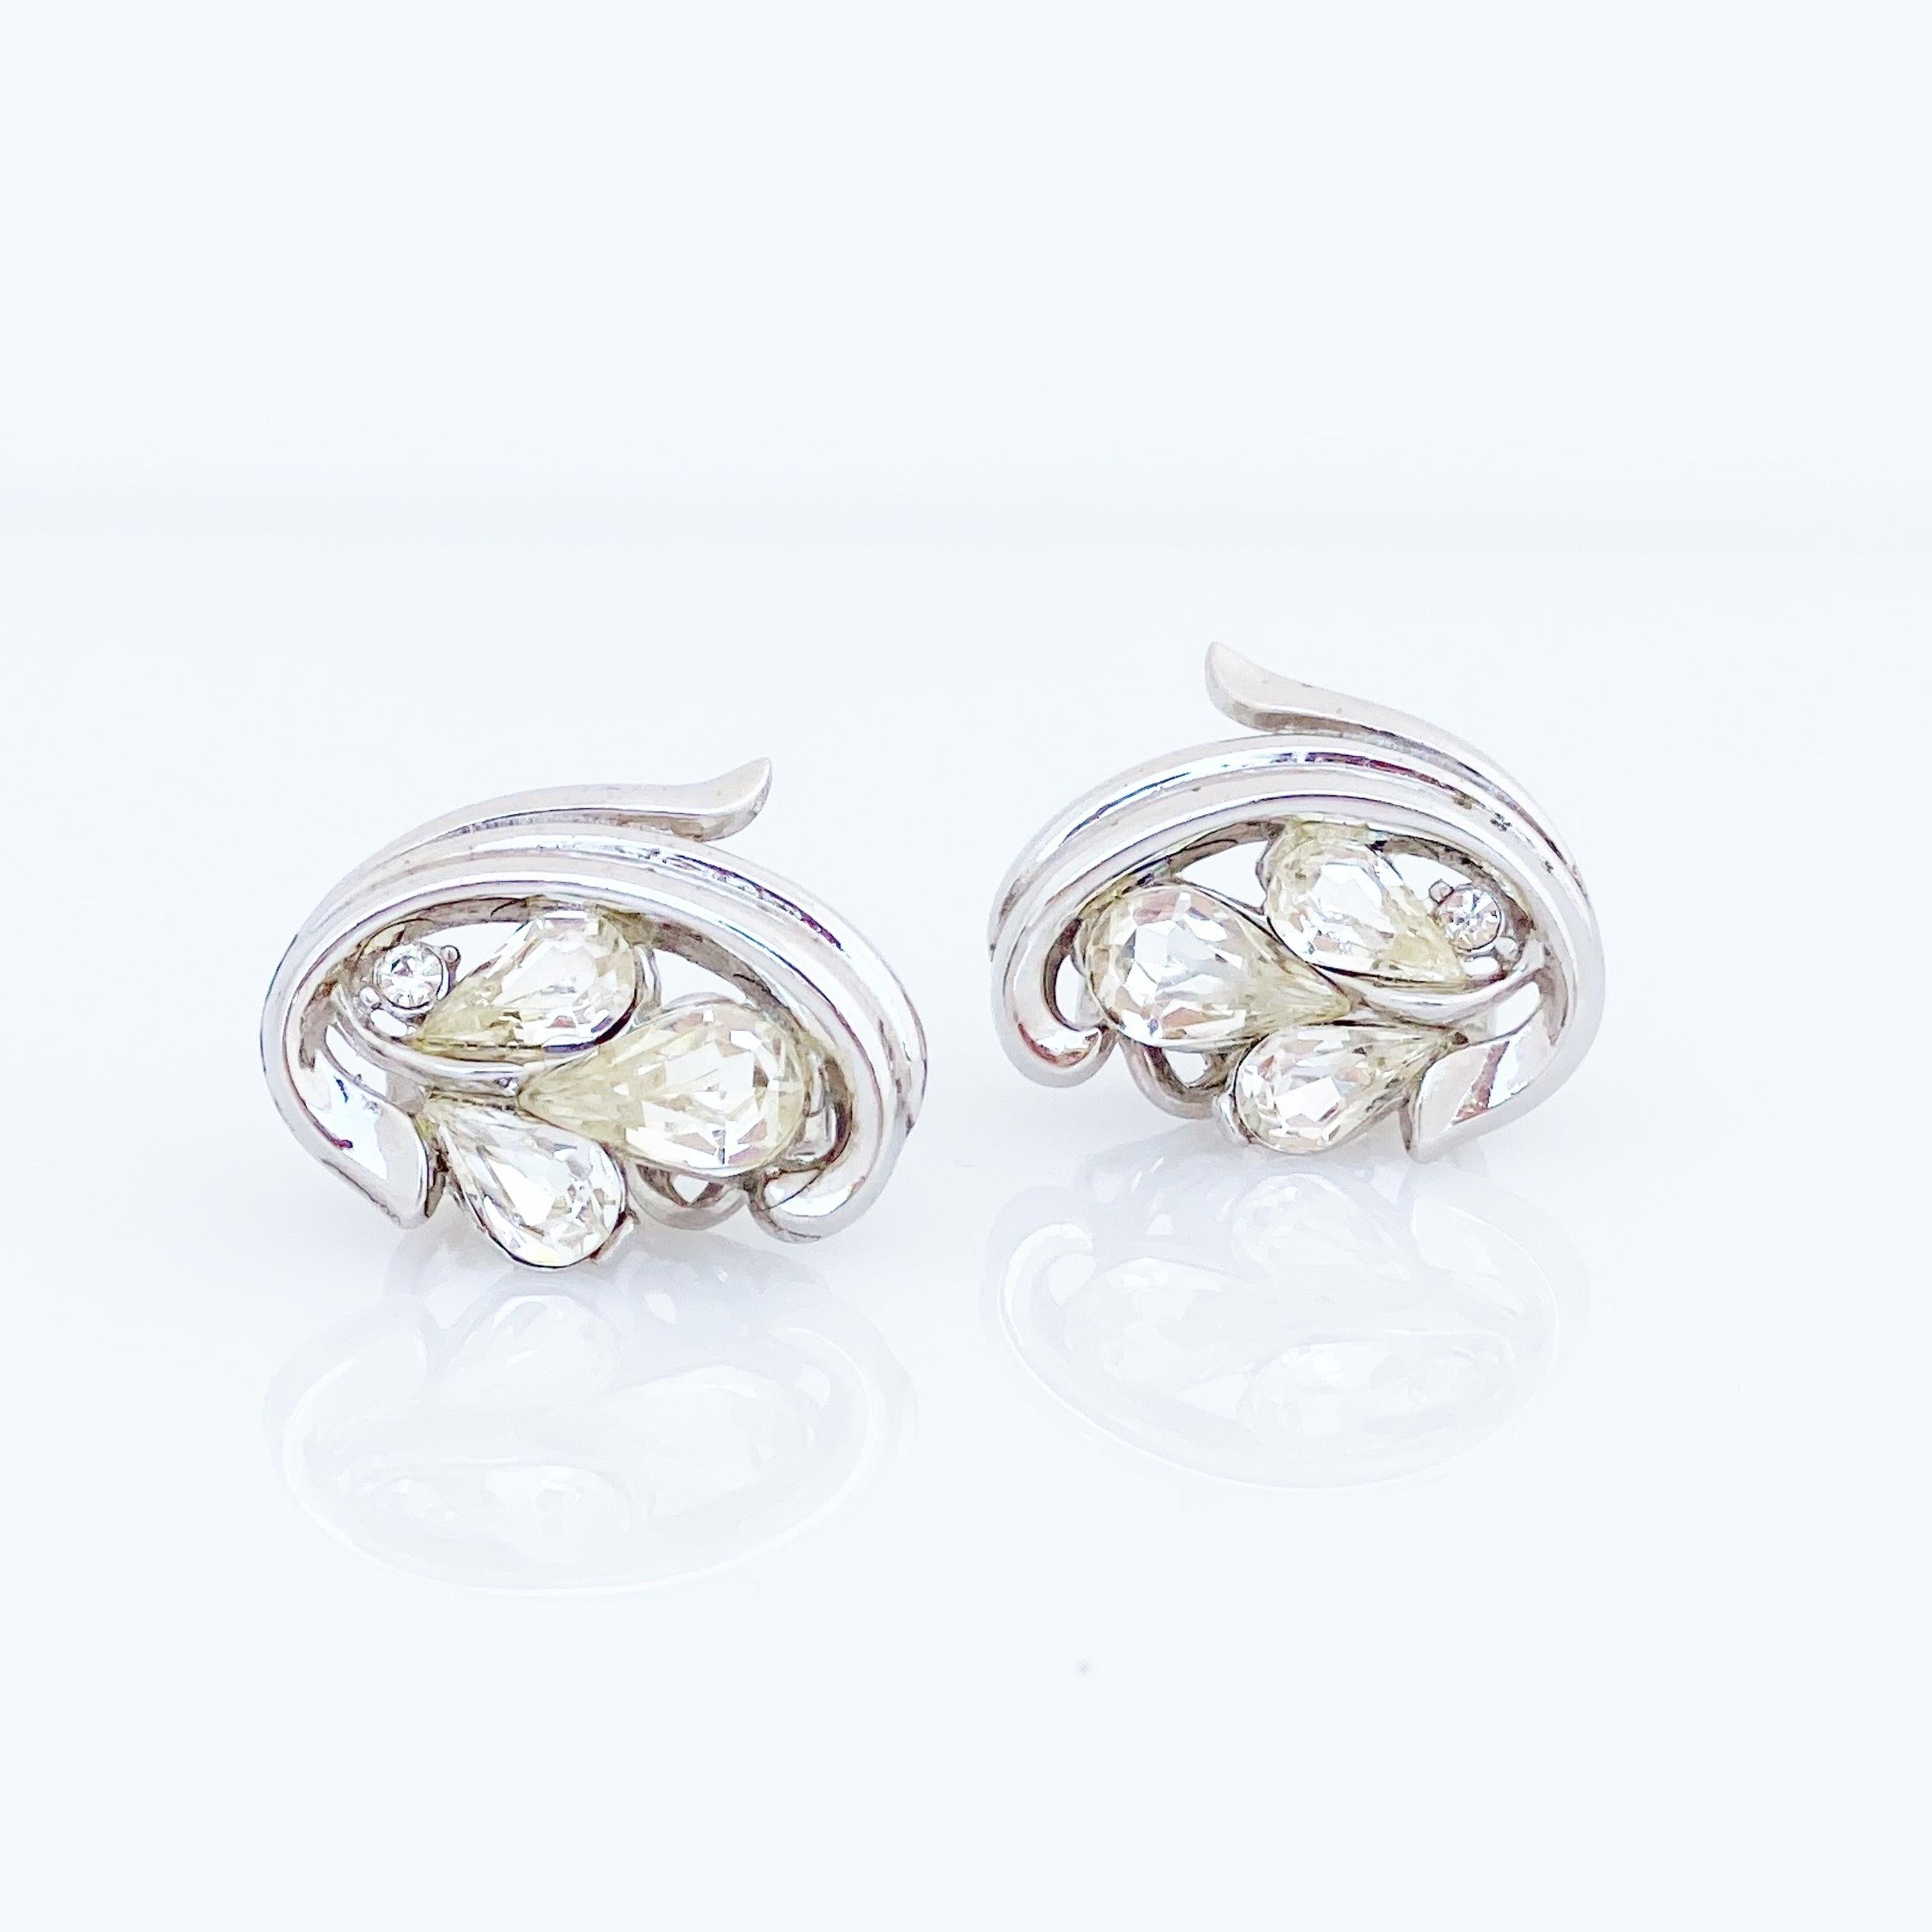 Modern Platinum Trifarium Earrings With Teardrop Crystals By Crown Trifari, 1950s